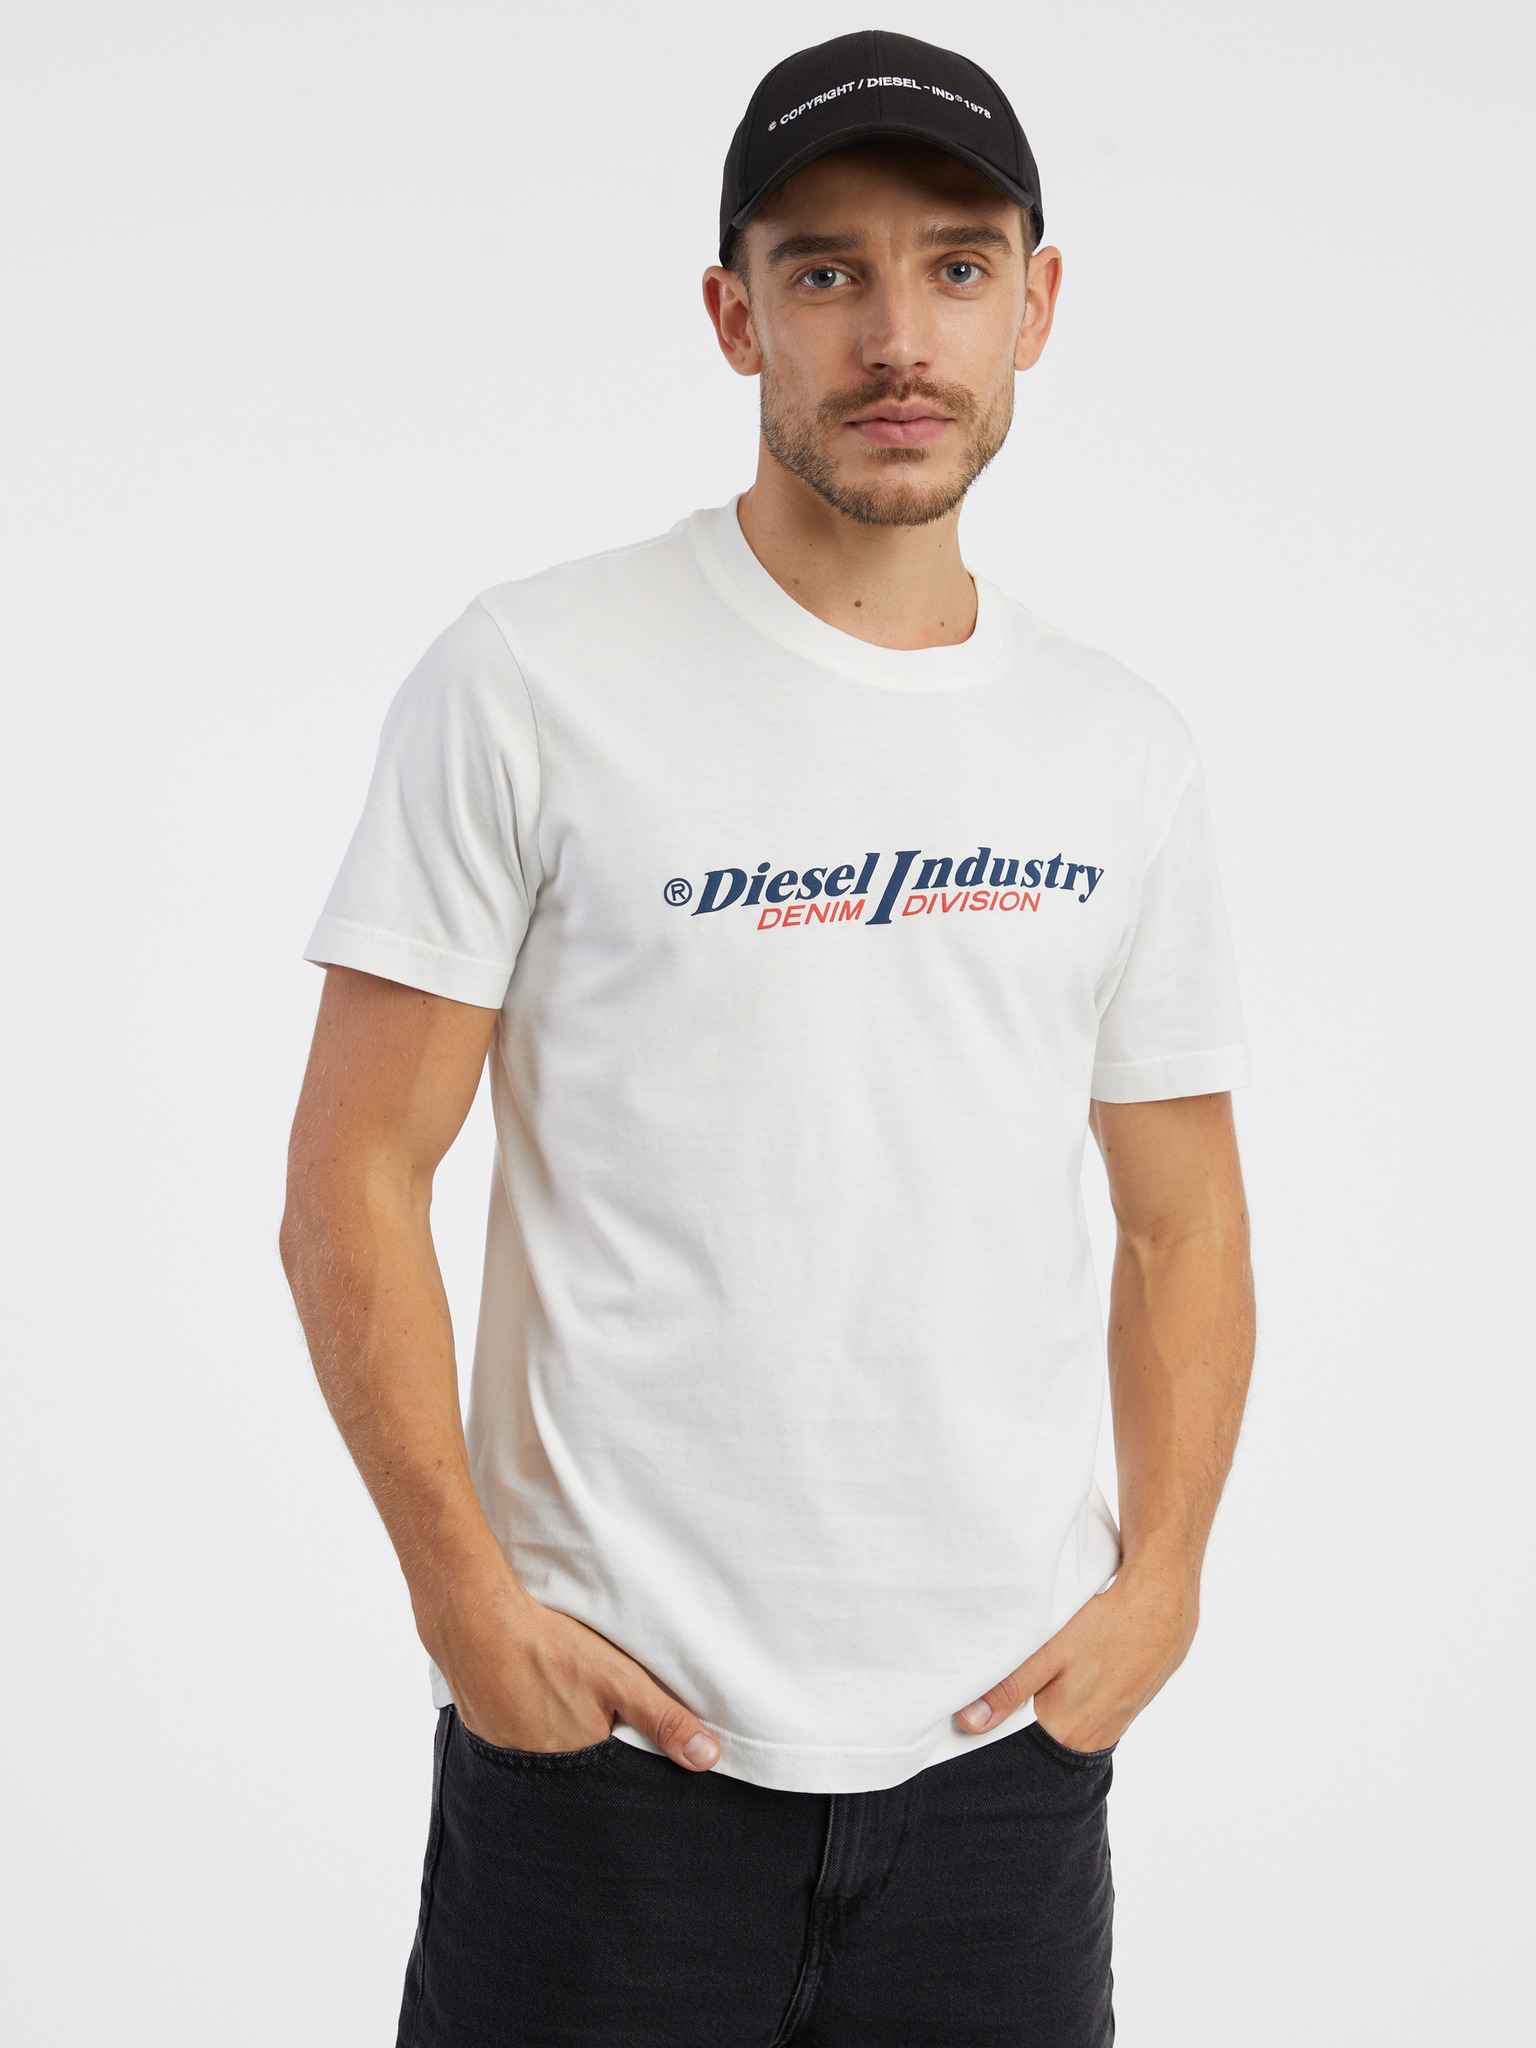  Diesel Mens Diego T-Shirt, XL, White : Clothing, Shoes